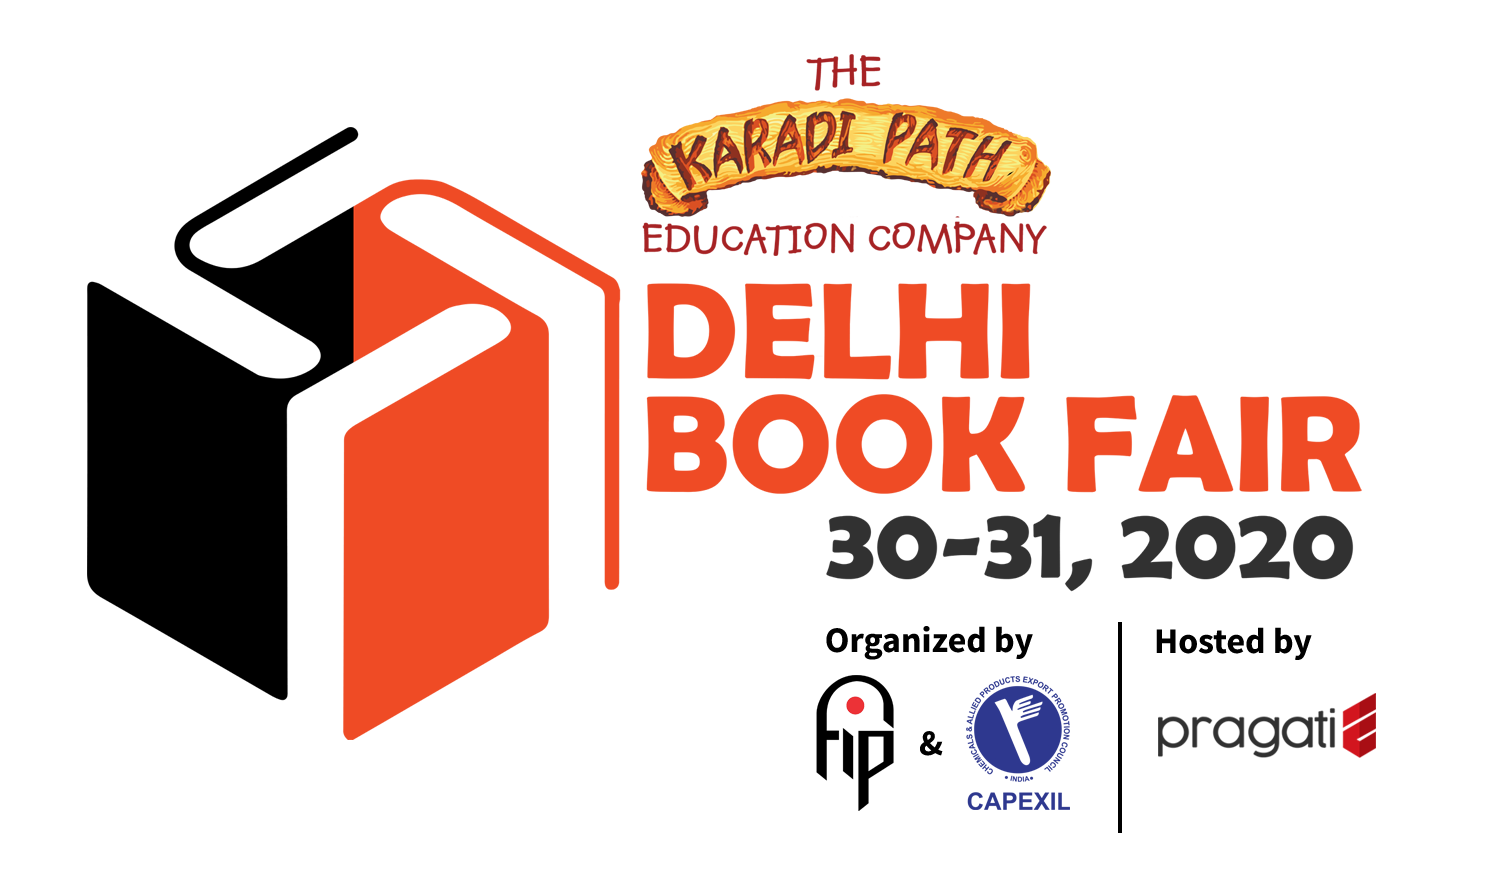 Frontlist | Cultural Fest founder Shabri Prasad curates Delhi Book Fair